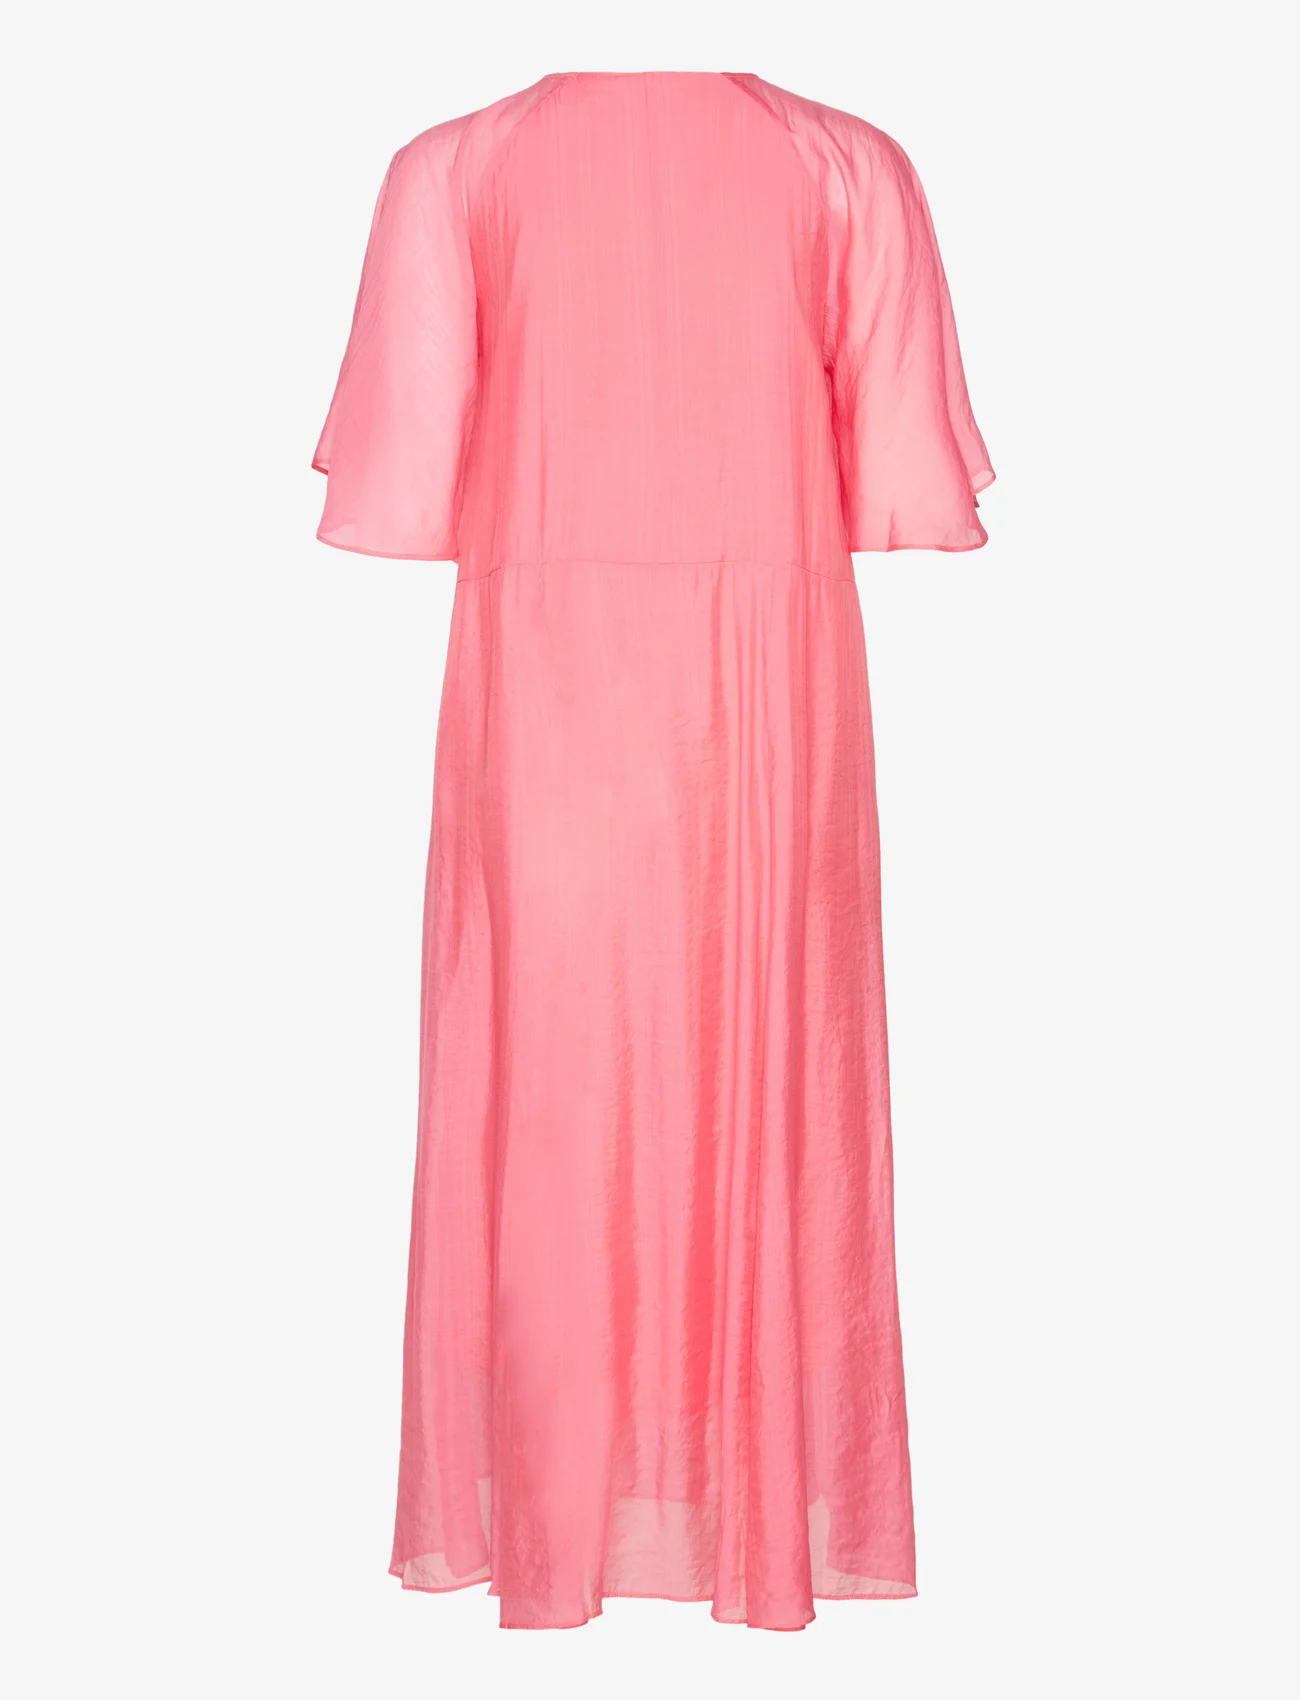 InWear - TriniIW Dress - summer dresses - pink rose - 1